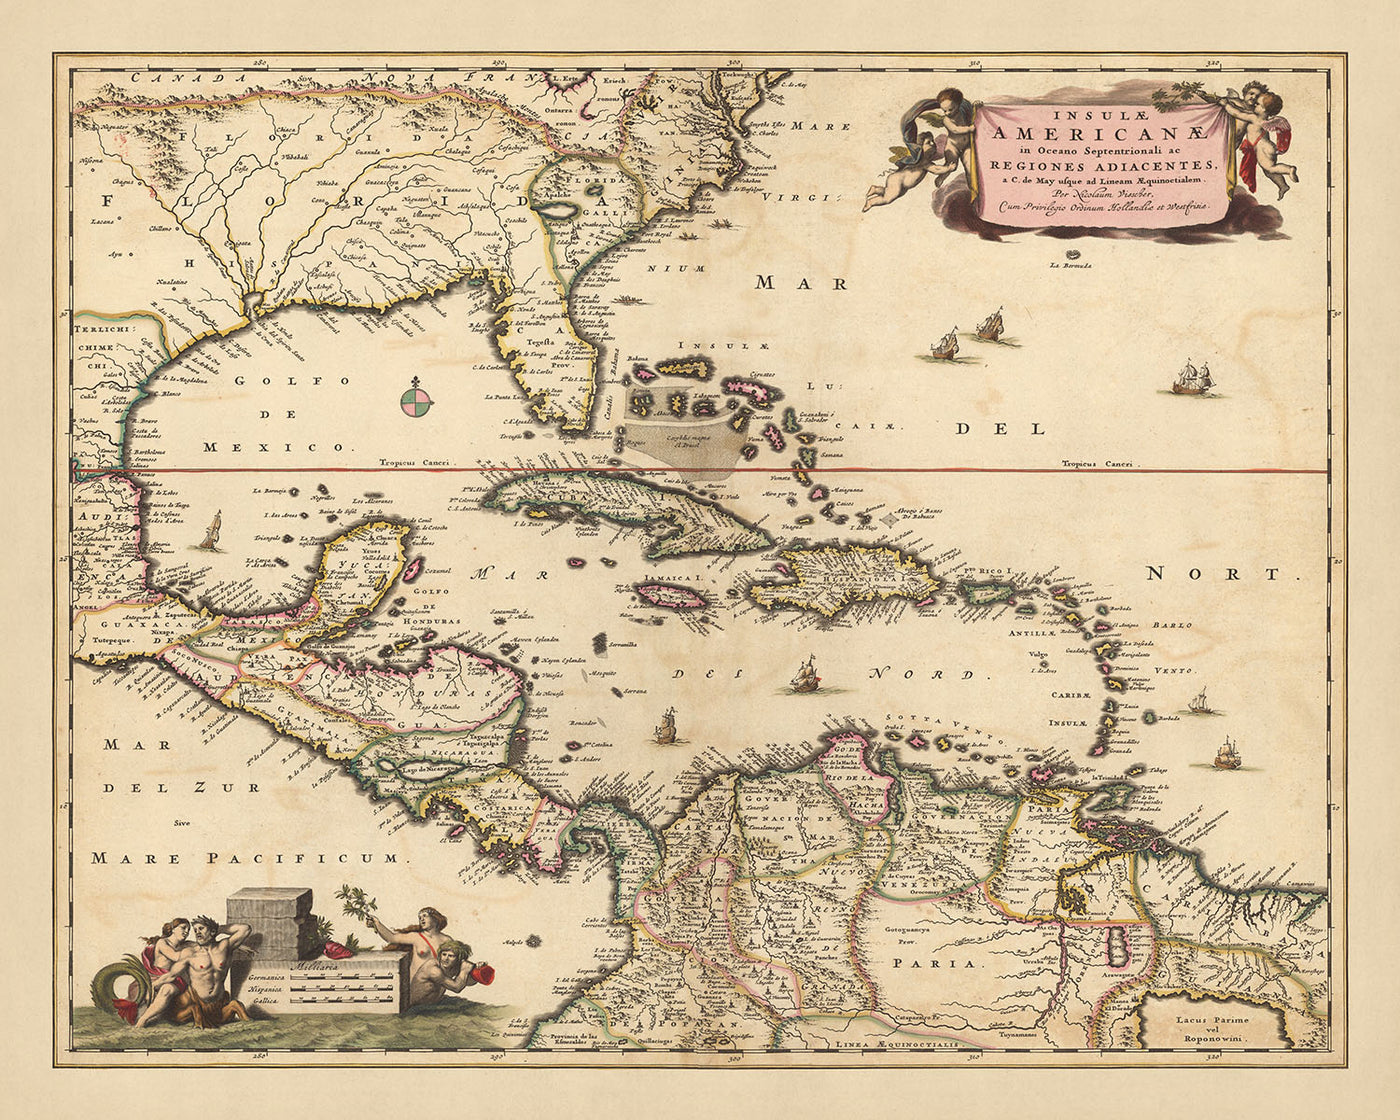 Old Map of the Caribbean, Florida & Central America by Visscher, 1690: Louisiana, Texas, Georgia, Yucatan, Bermuda Triangle